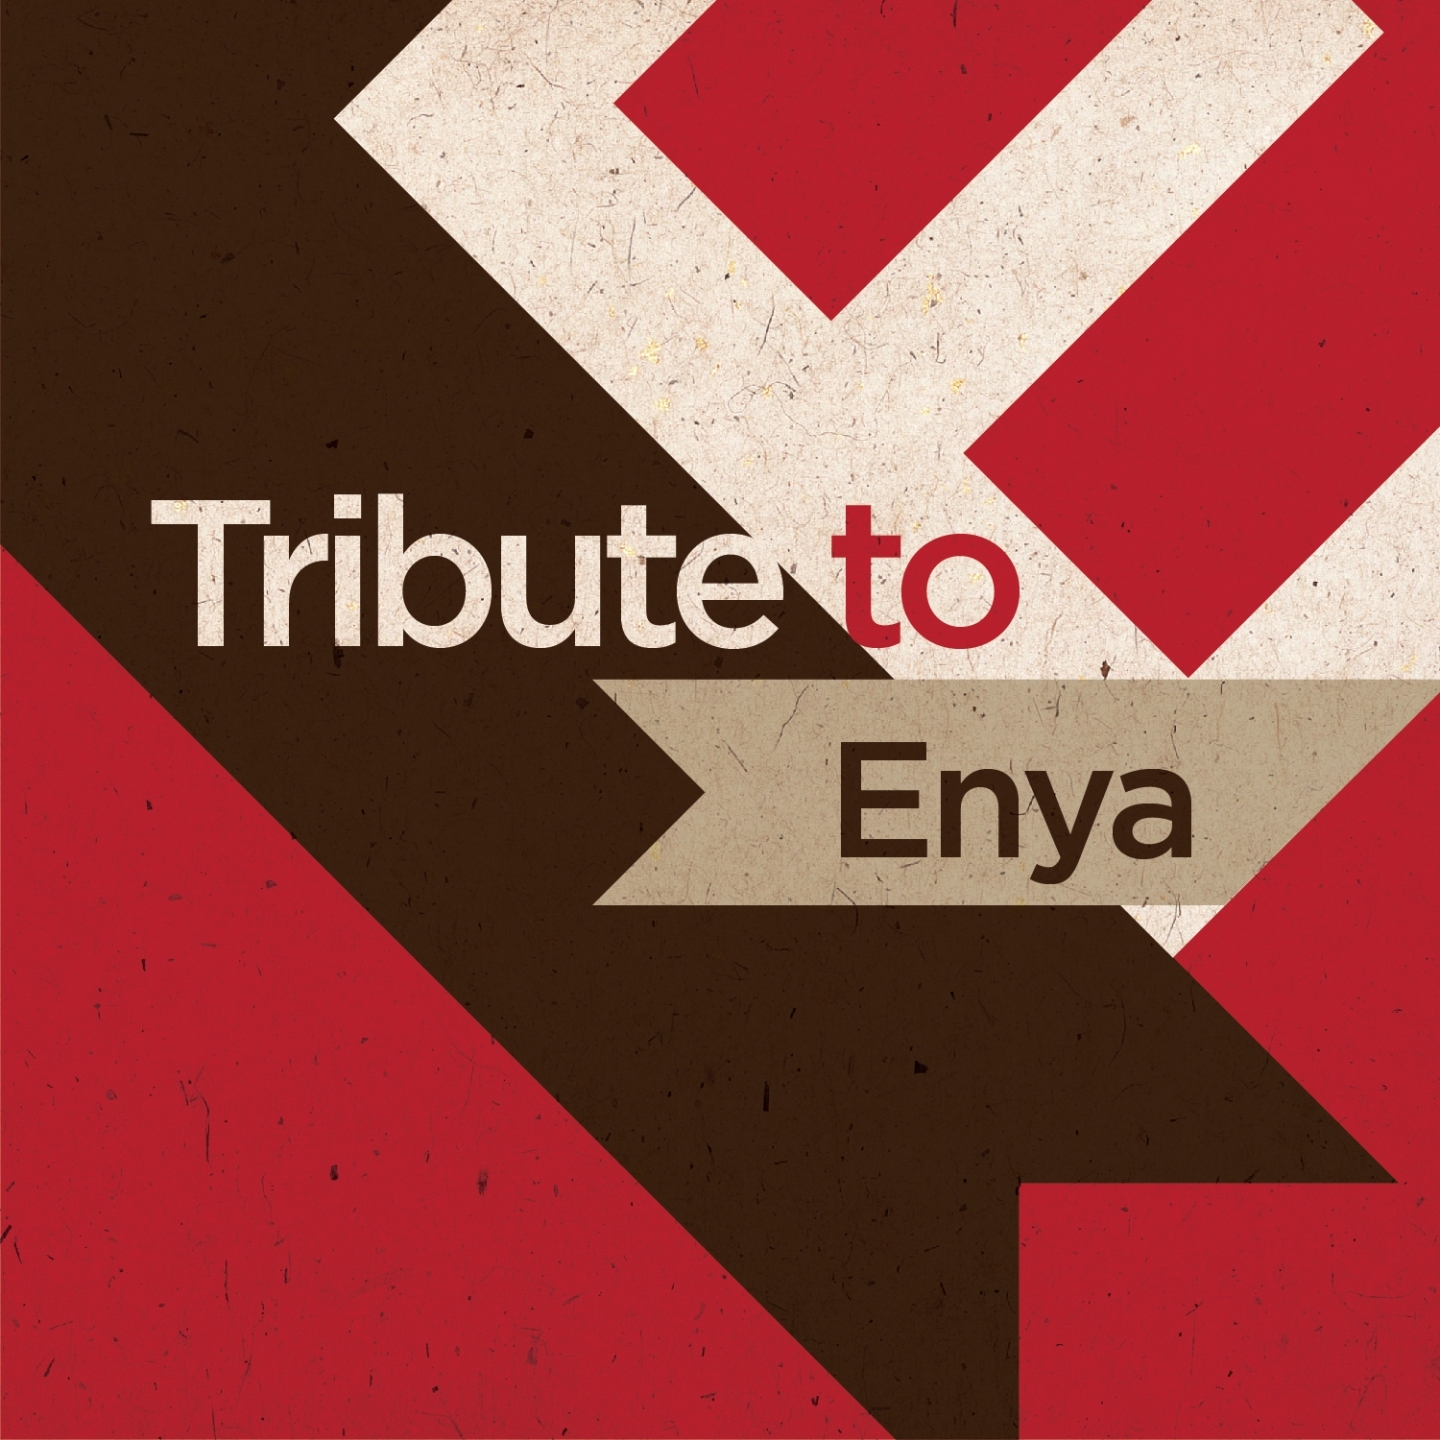 Tribute to Enya